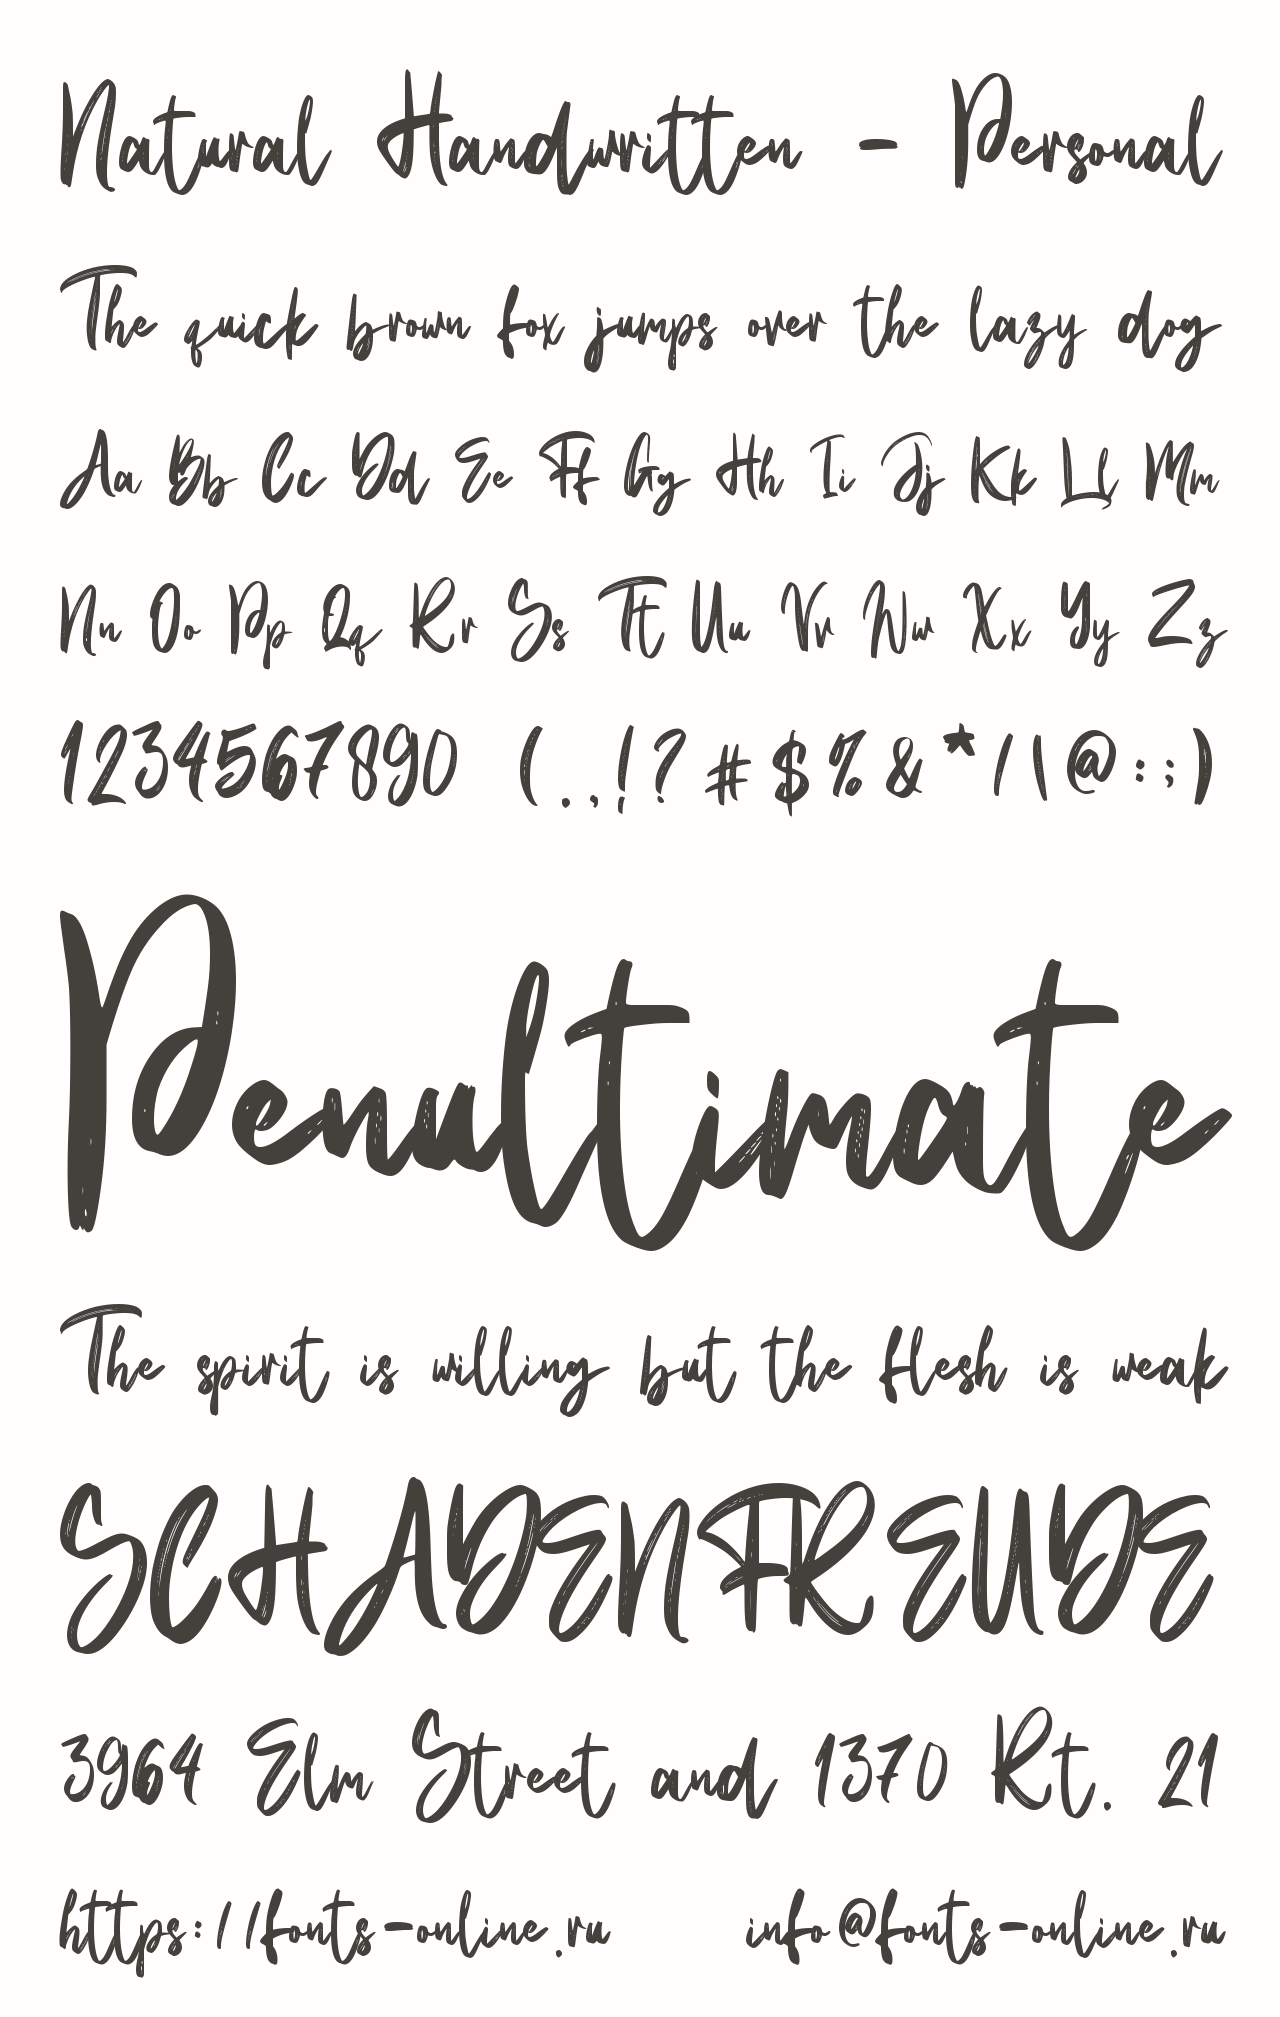 Шрифт Natural Handwritten - Personal